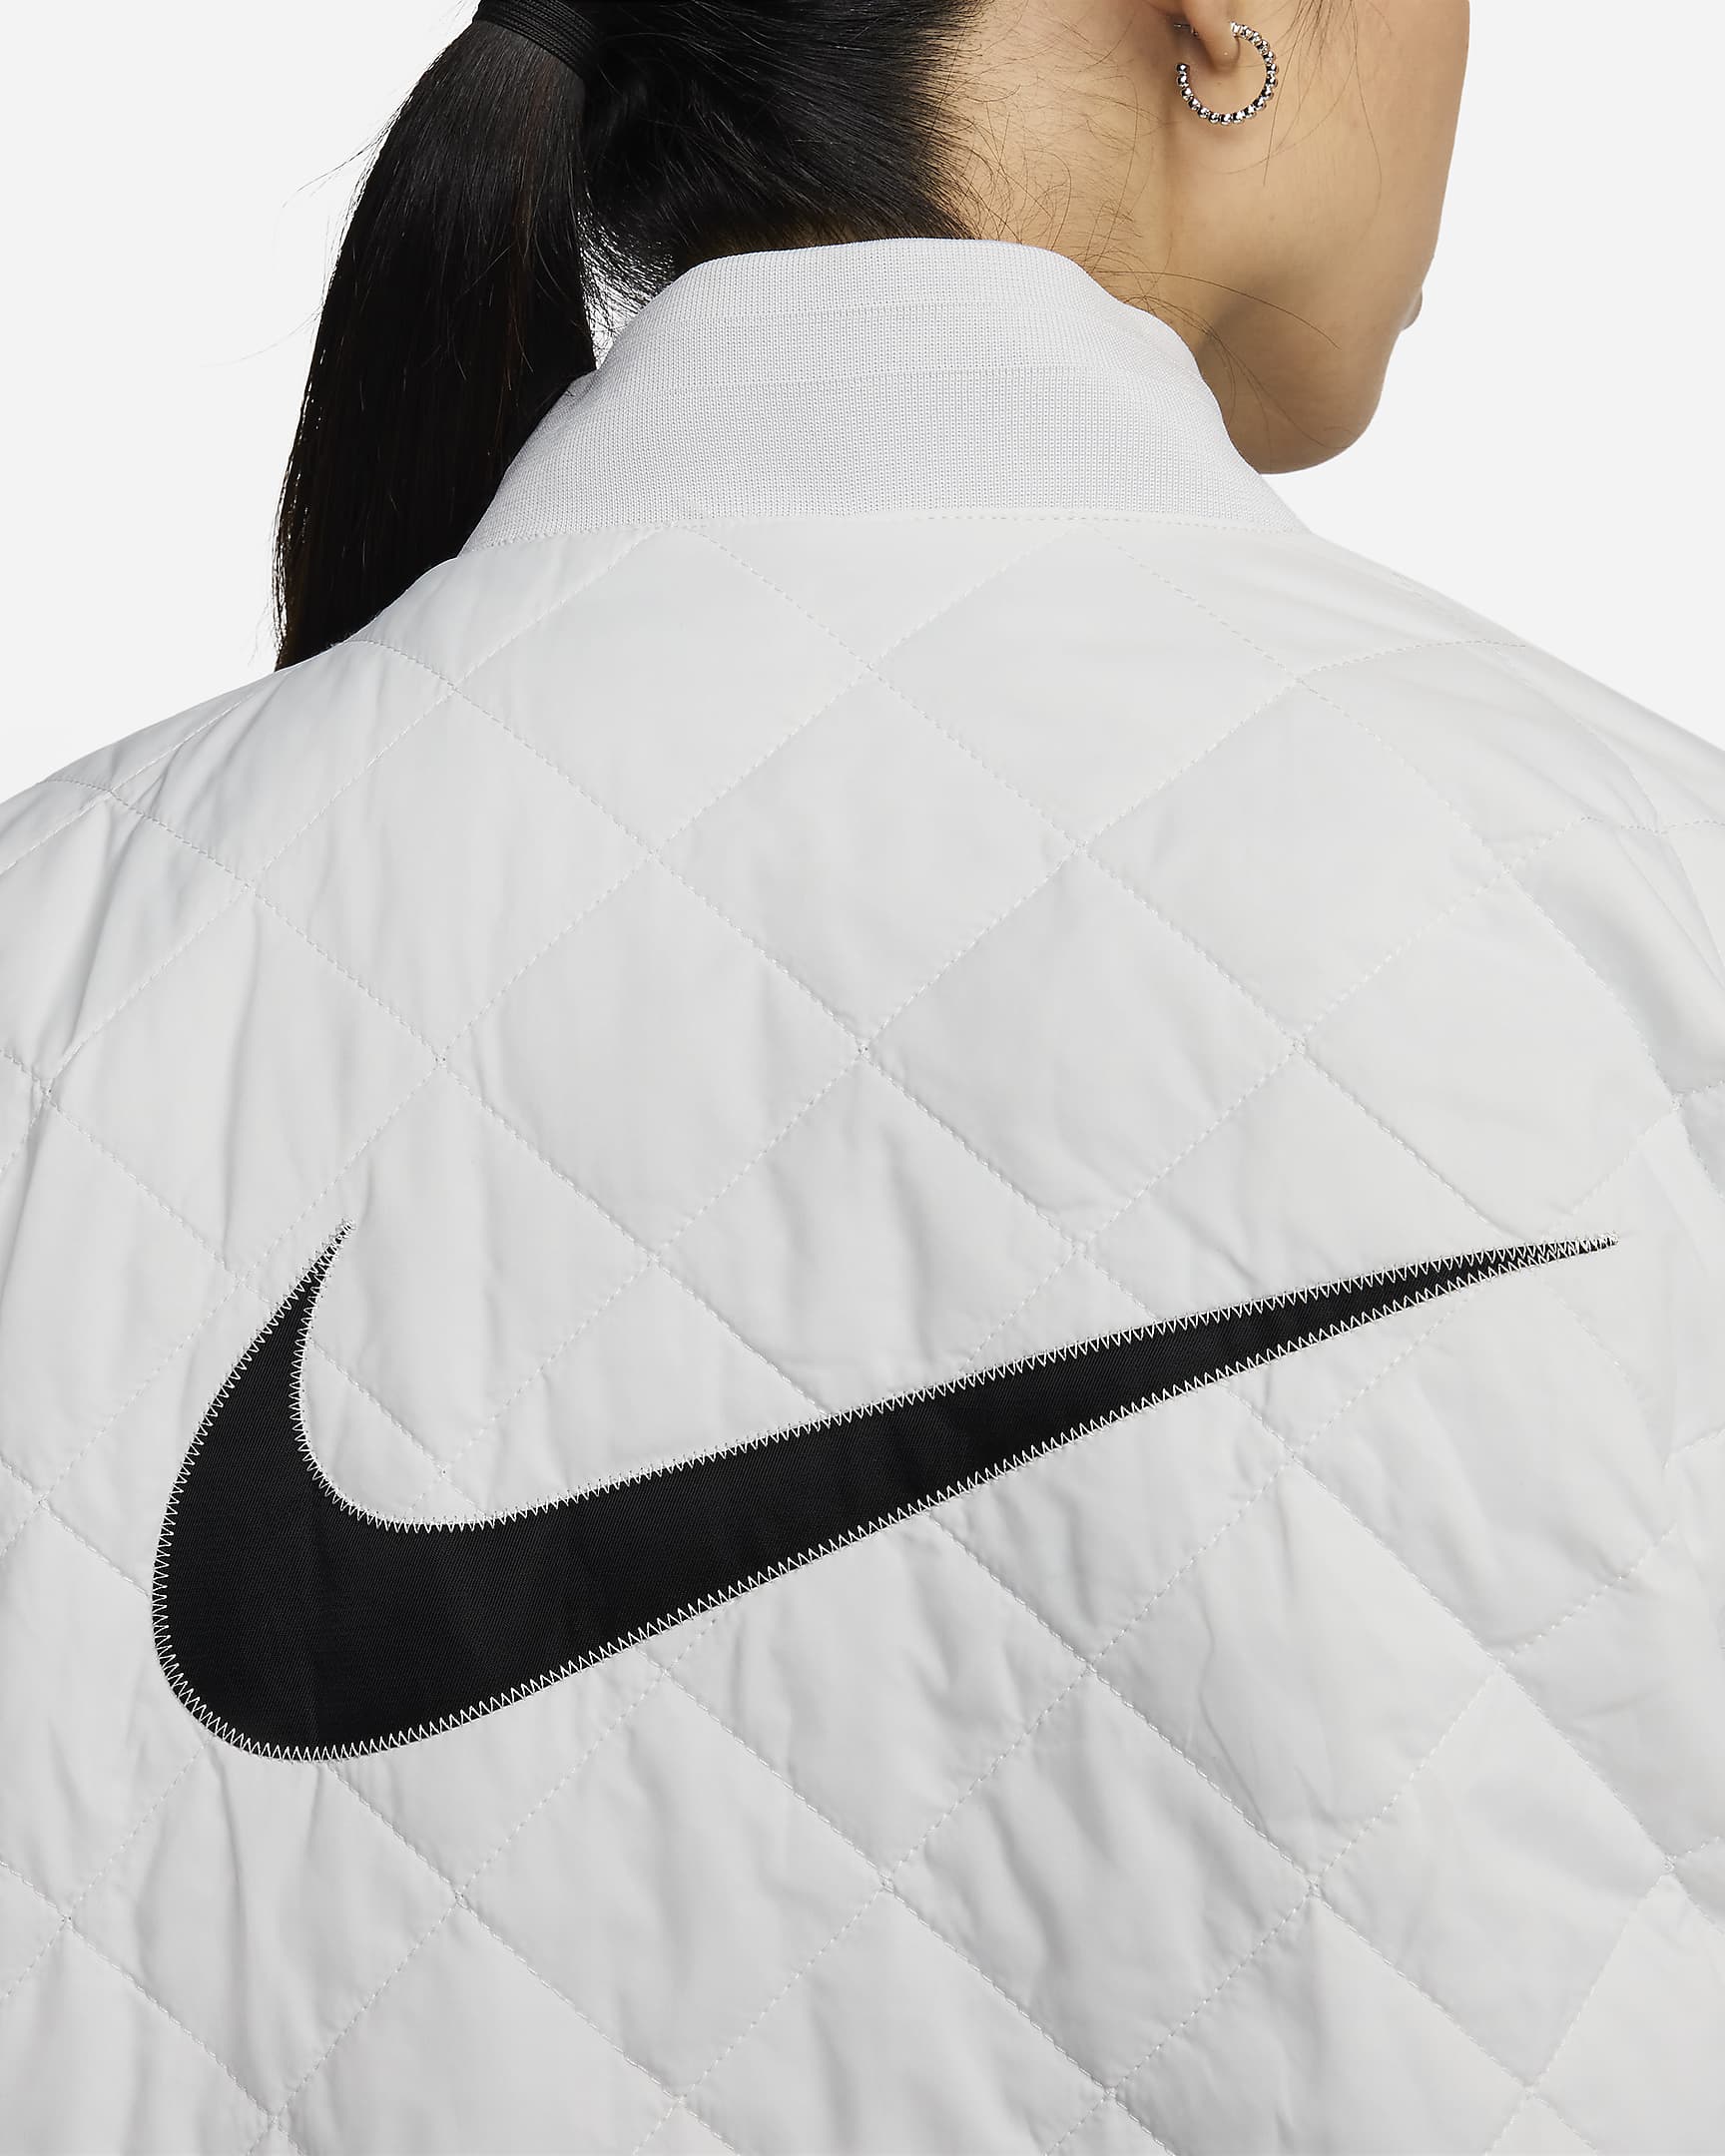 Nike Sportswear Women's Varsity Bomber Jacket - Photon Dust/Photon Dust/Black